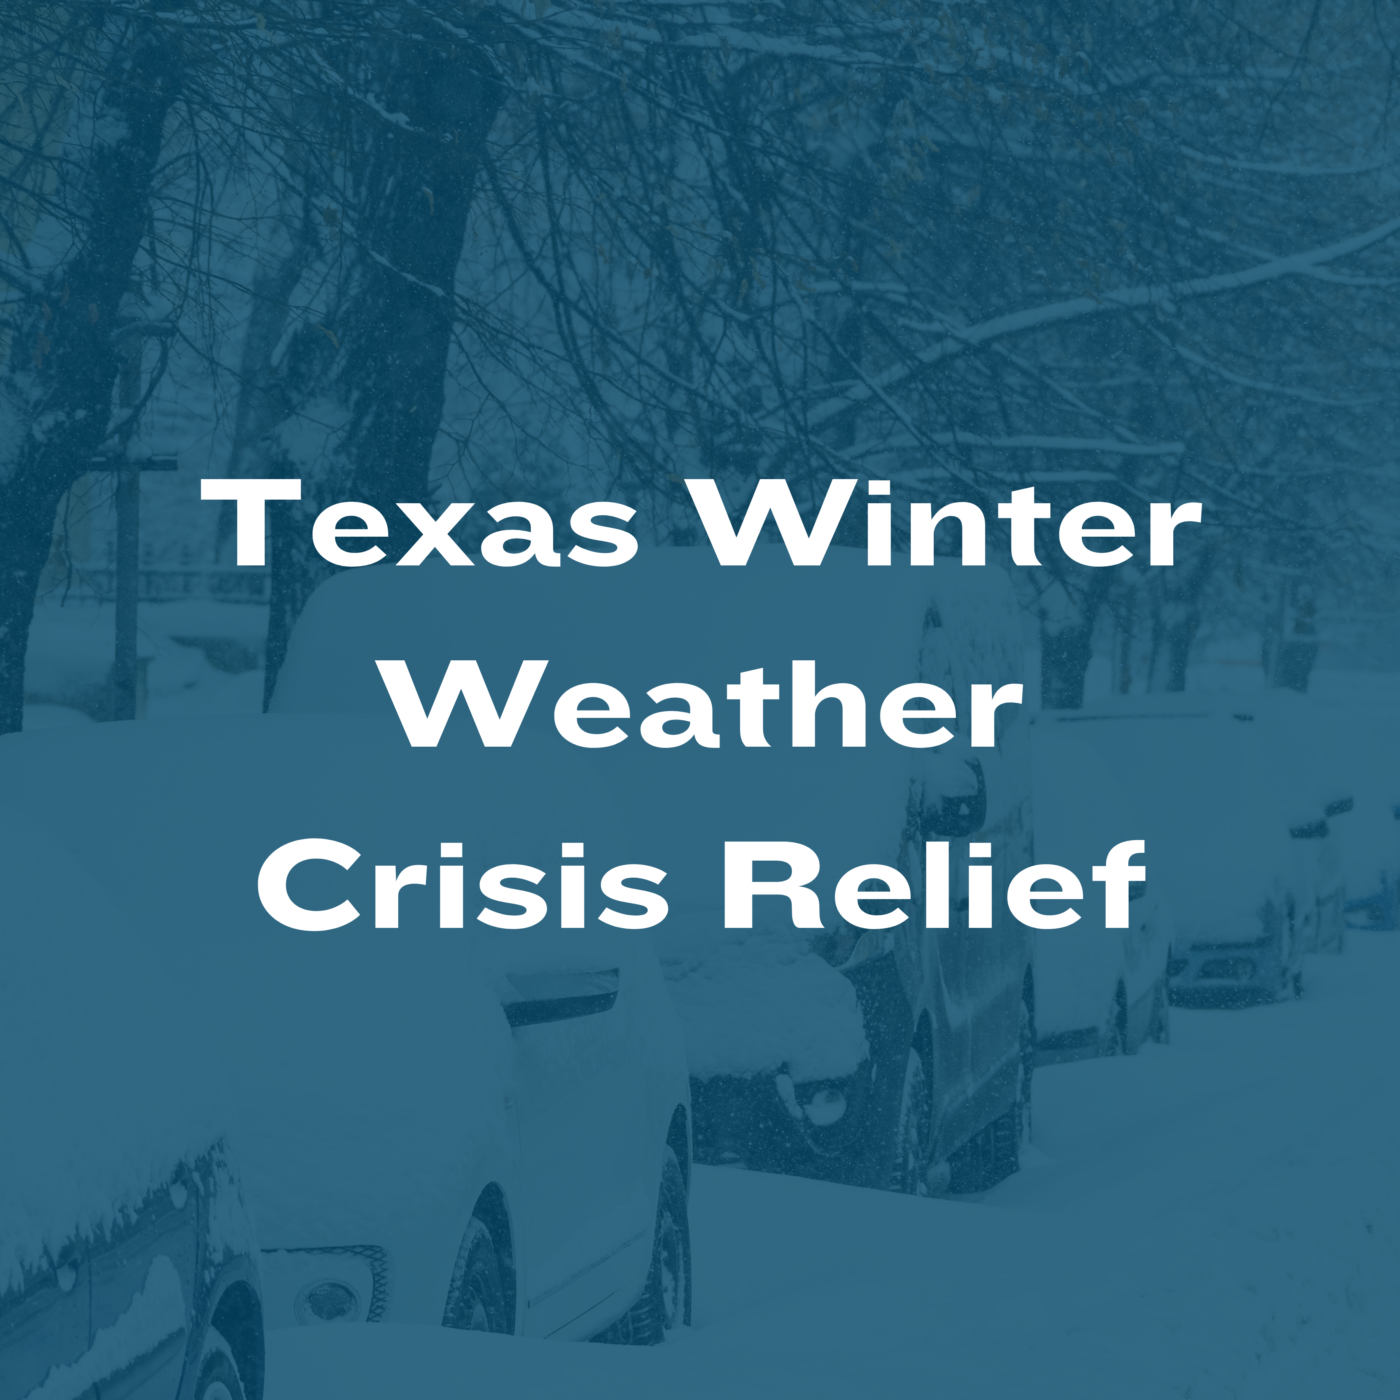 Texas Winter Weather Crisis